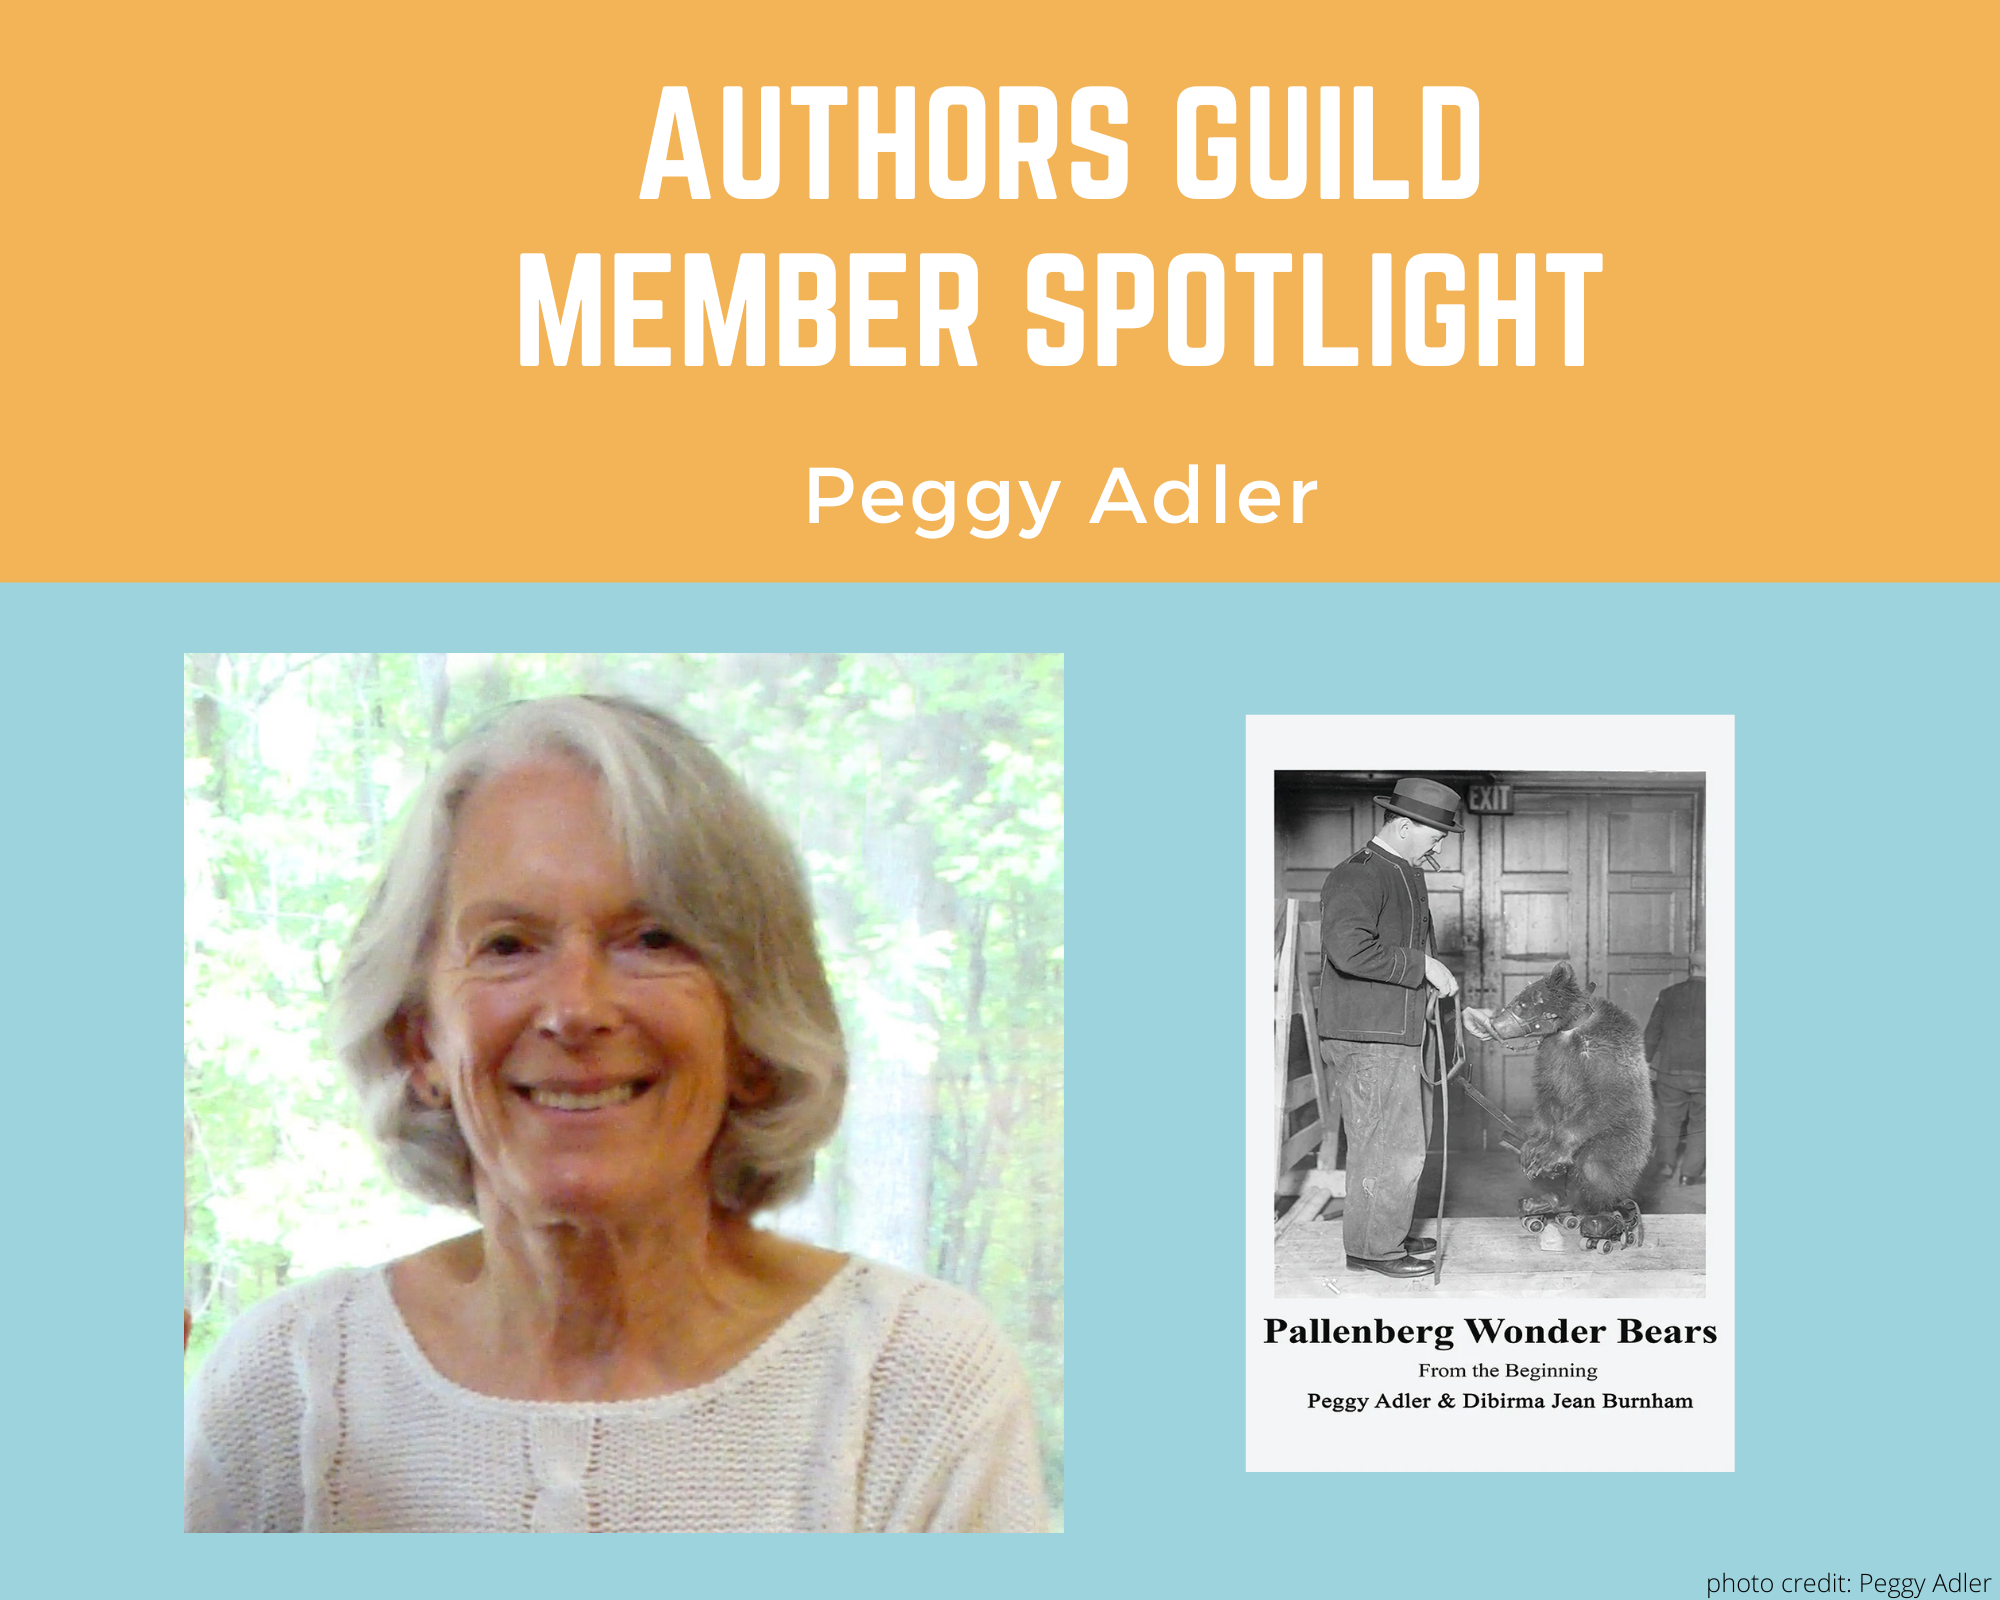 Peggy Adler and her book Pallenberg Wonder Bears